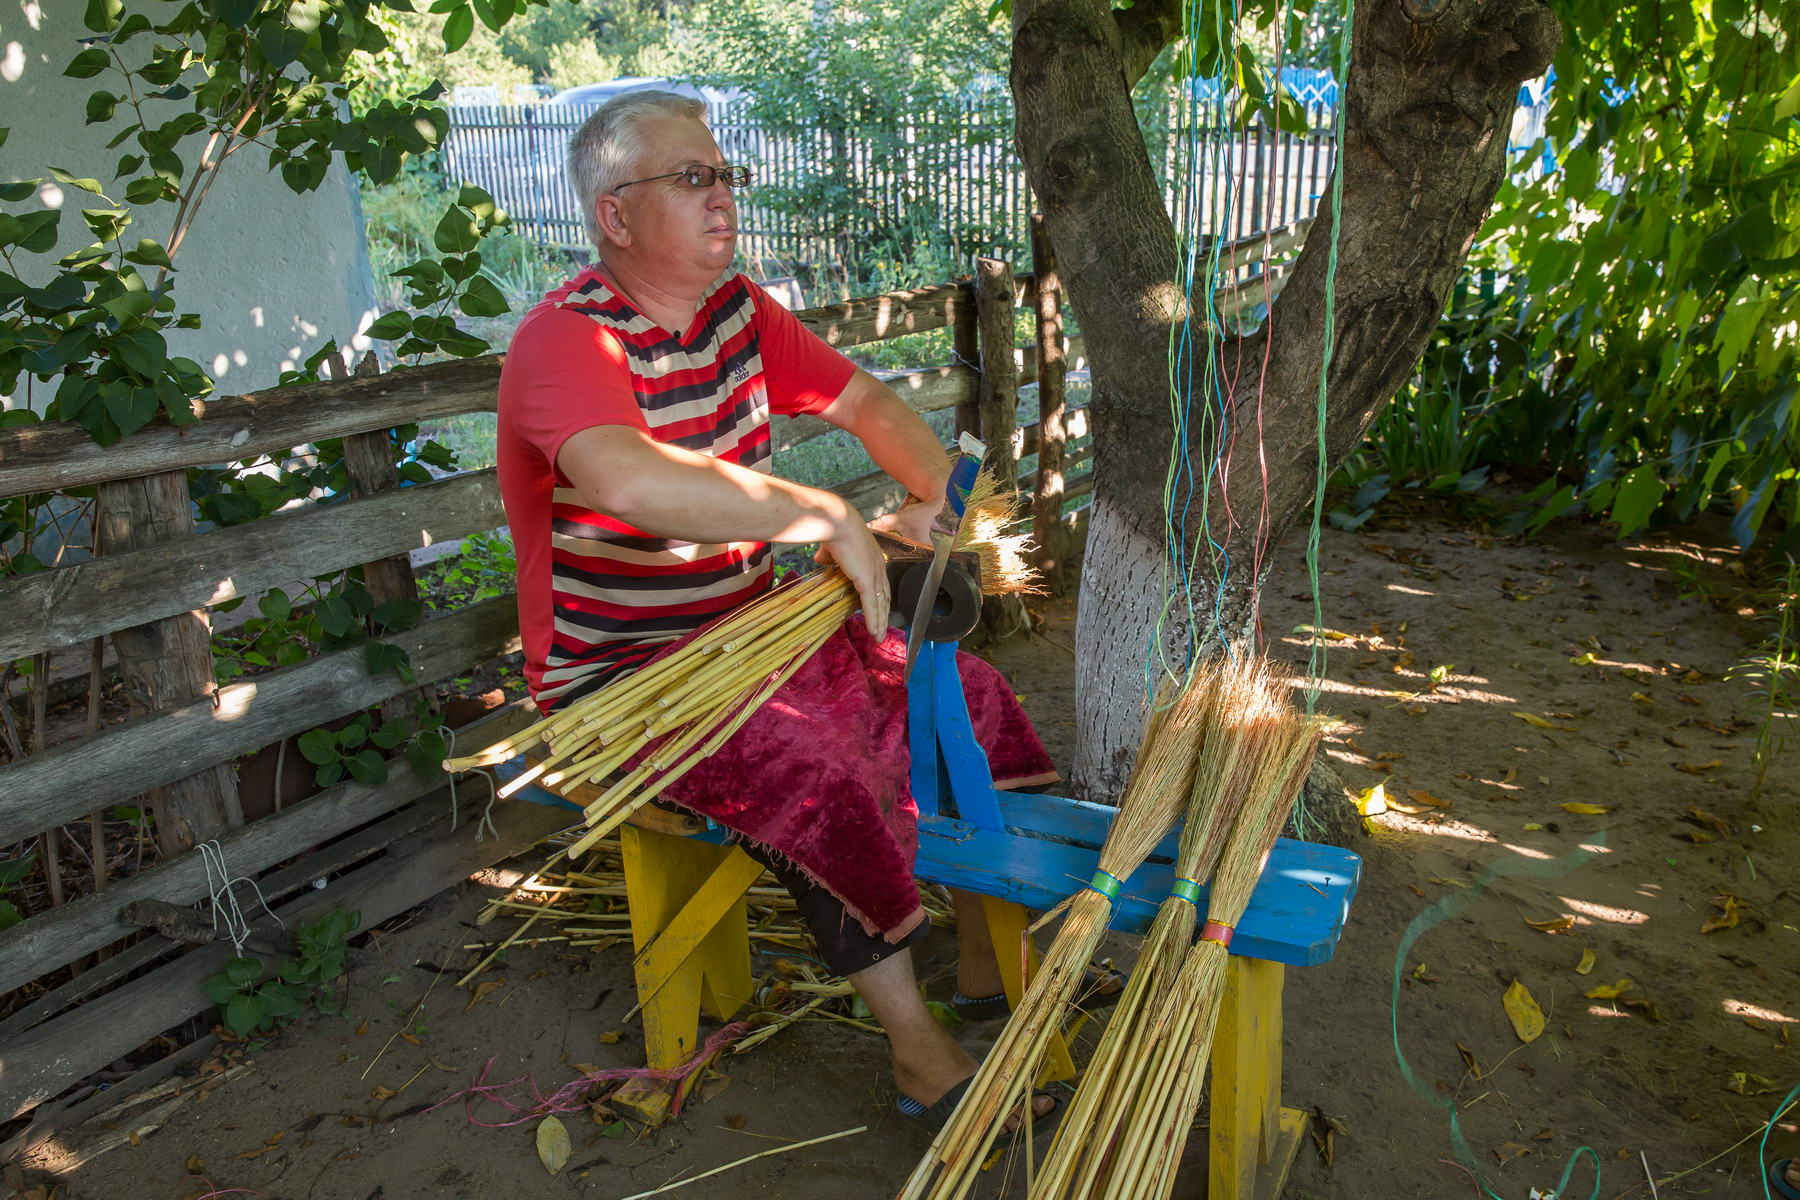 The village creating Ukraine’s eco friendly iconic brooms